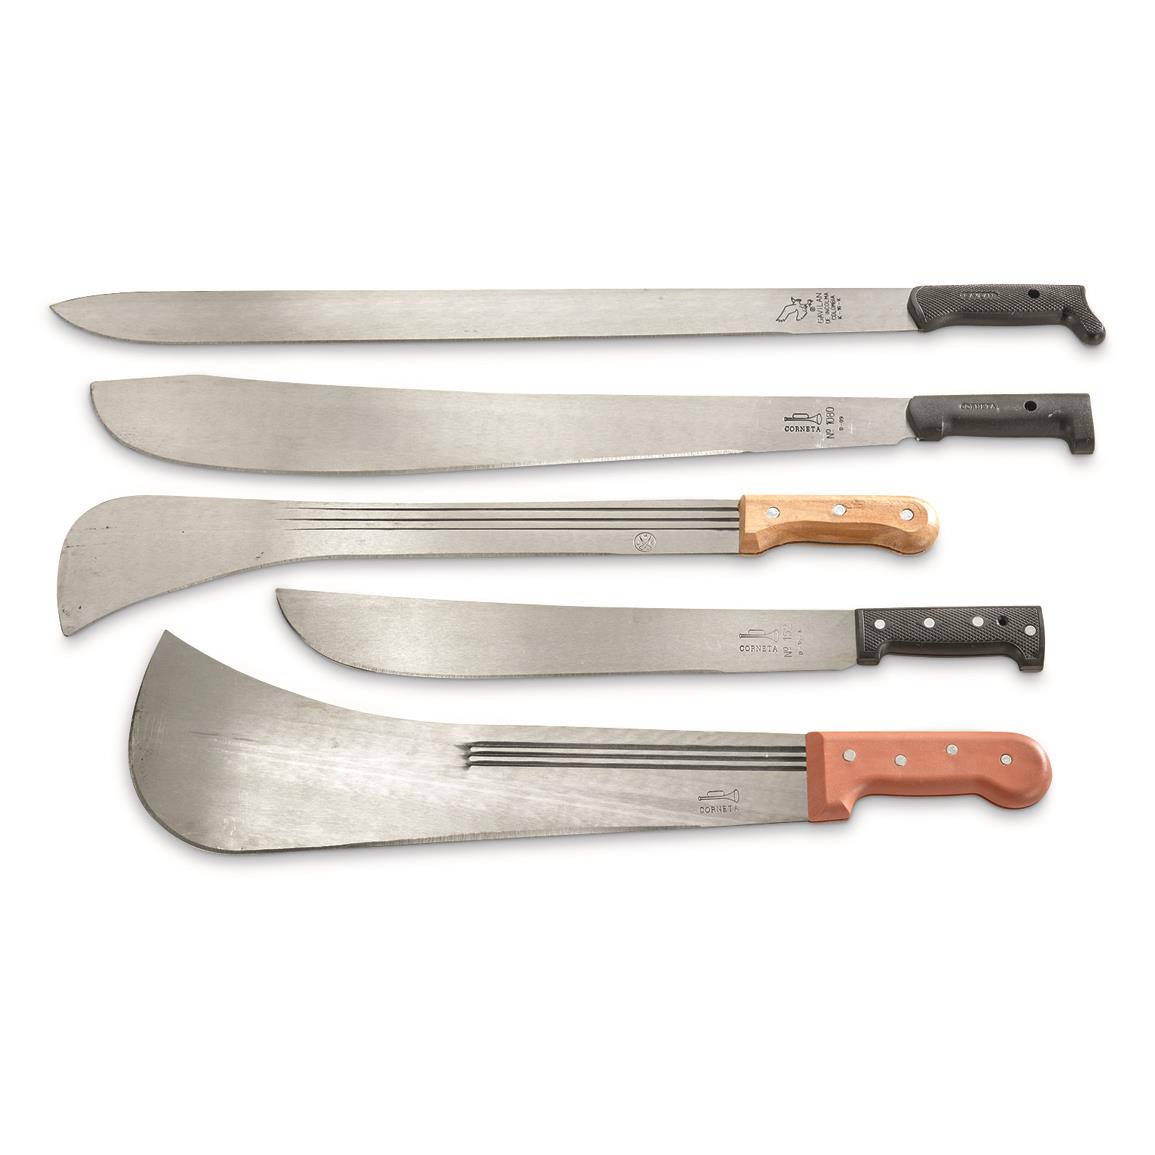 Machetes Colombian Military Surplus Assorted Machete Knives, 5 Pack, New - 653294,  Swords & Machetes at Sportsman's Guide